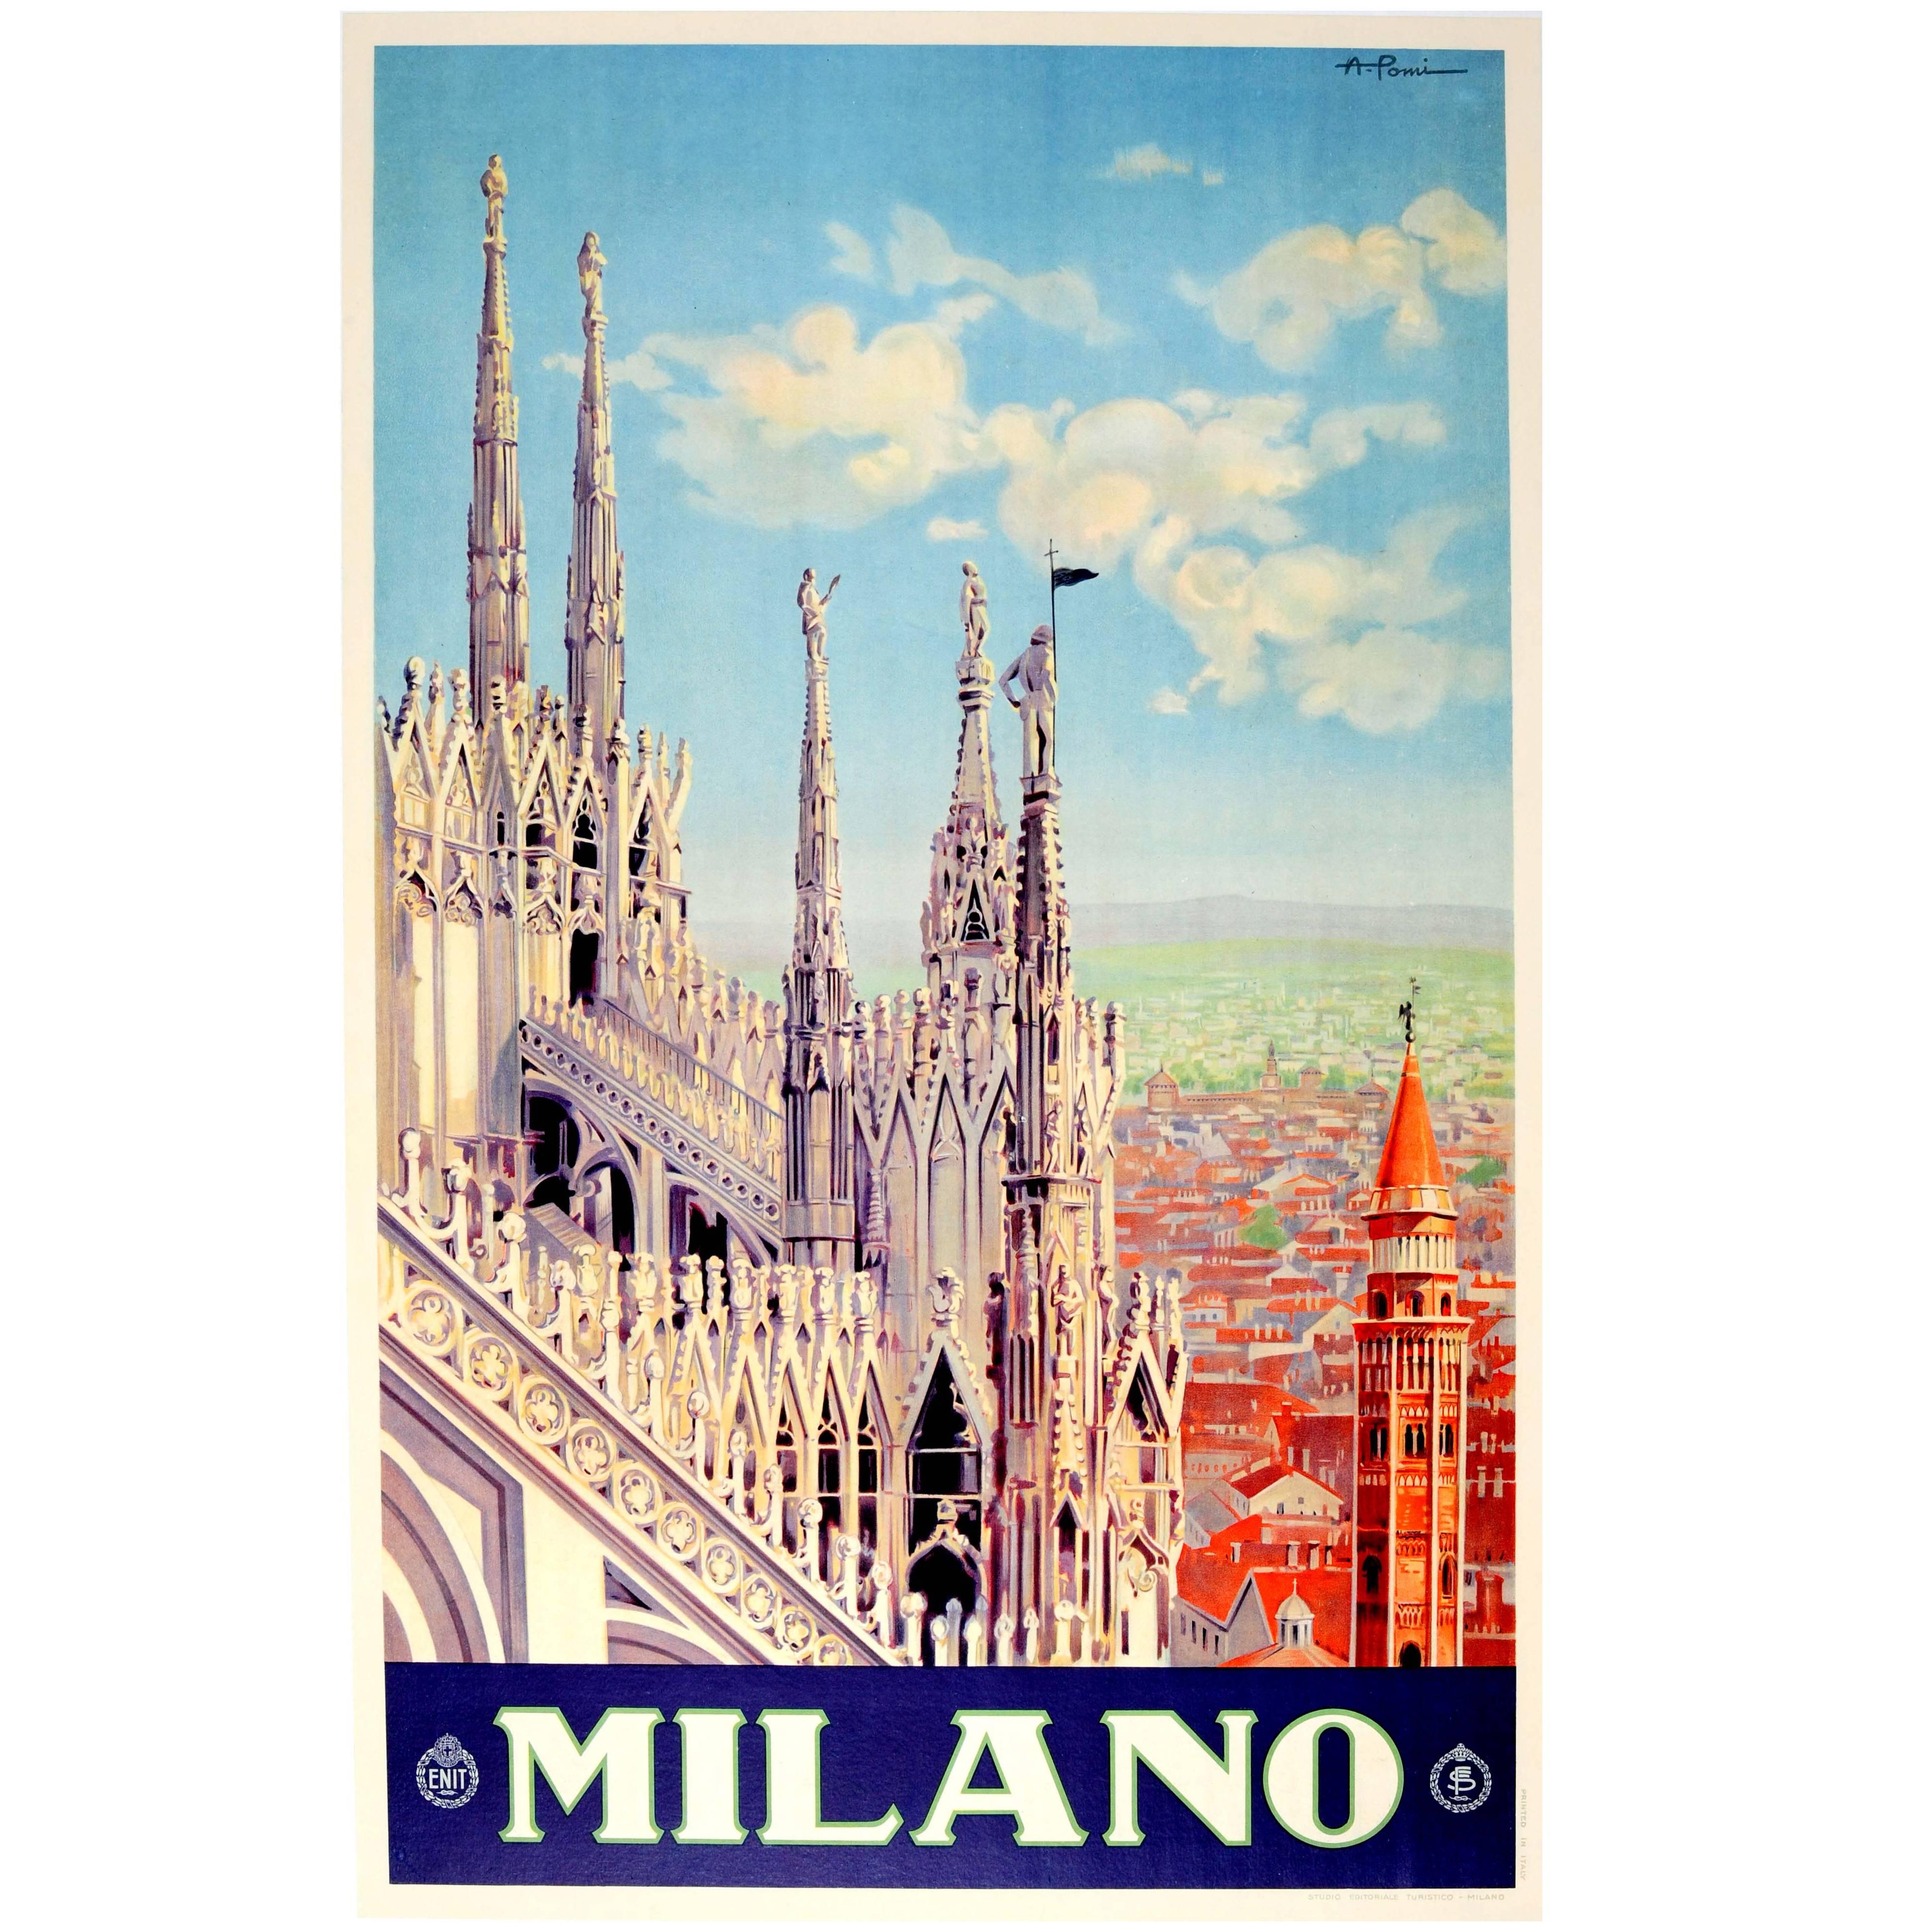 Original Vintage ENIT Travel Poster Advertising Milano, Italy 'Milan Cathedral'